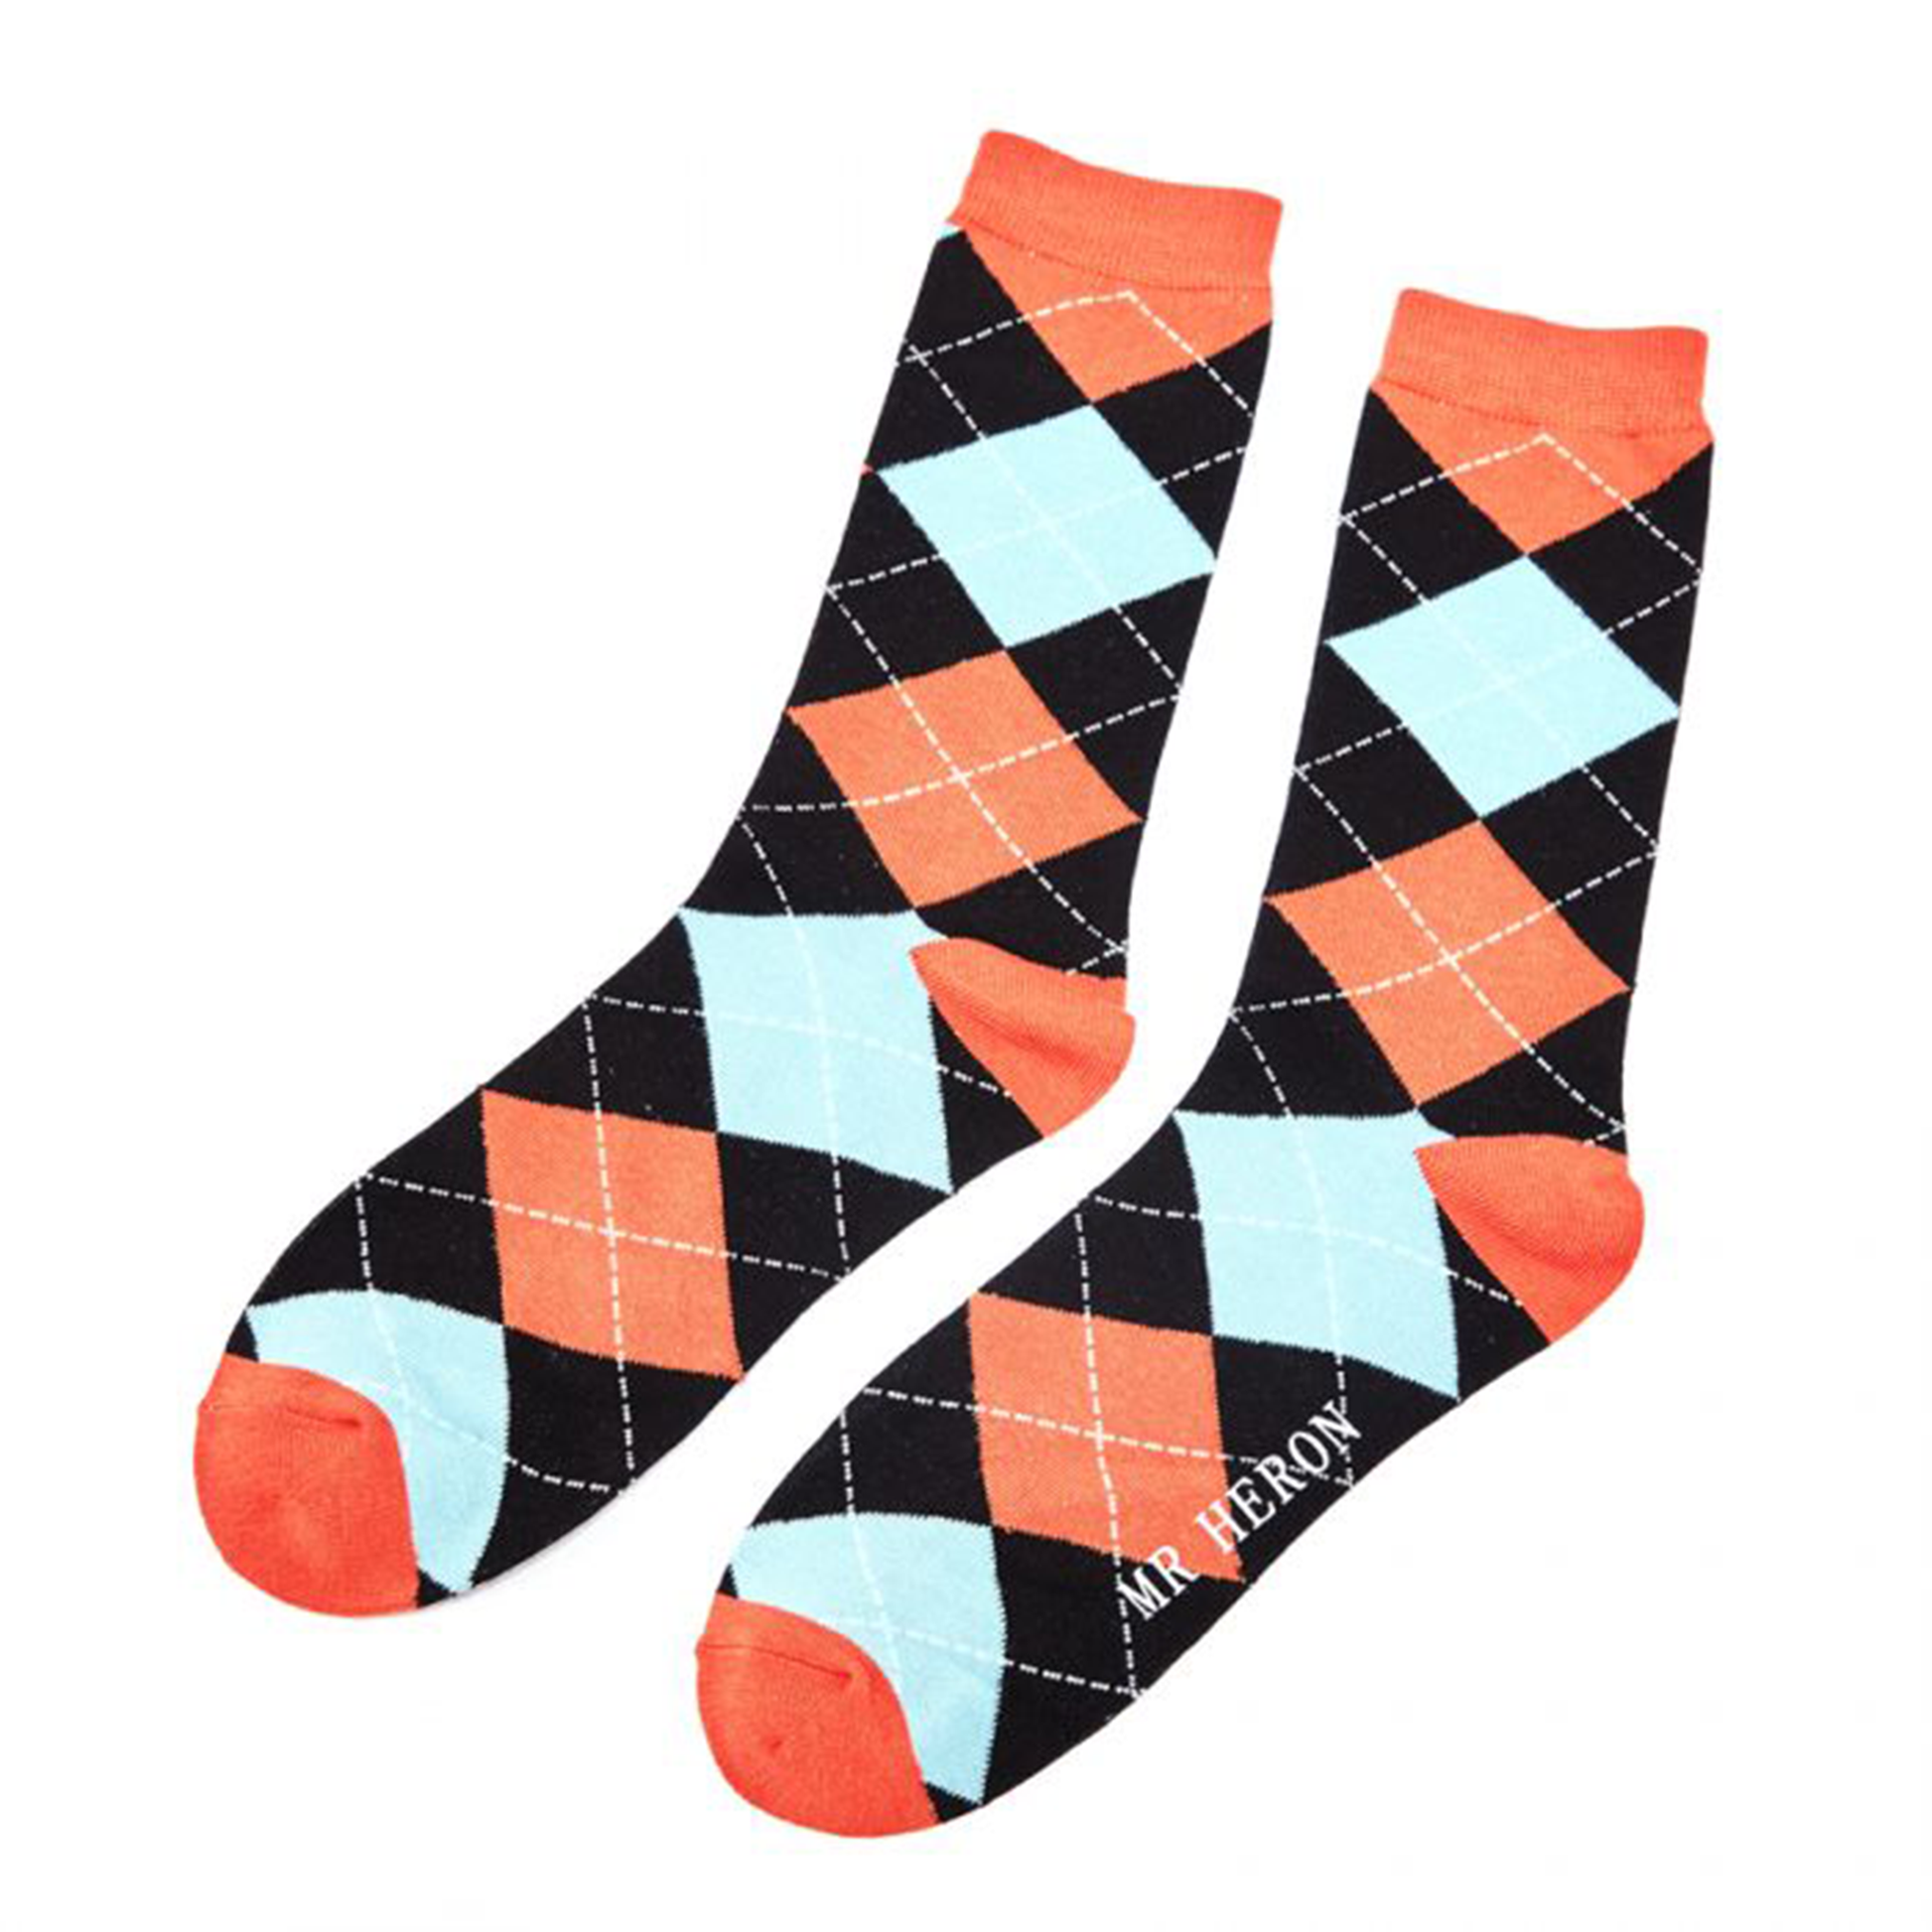 a pair of black, blue and orange argyle patterned socks